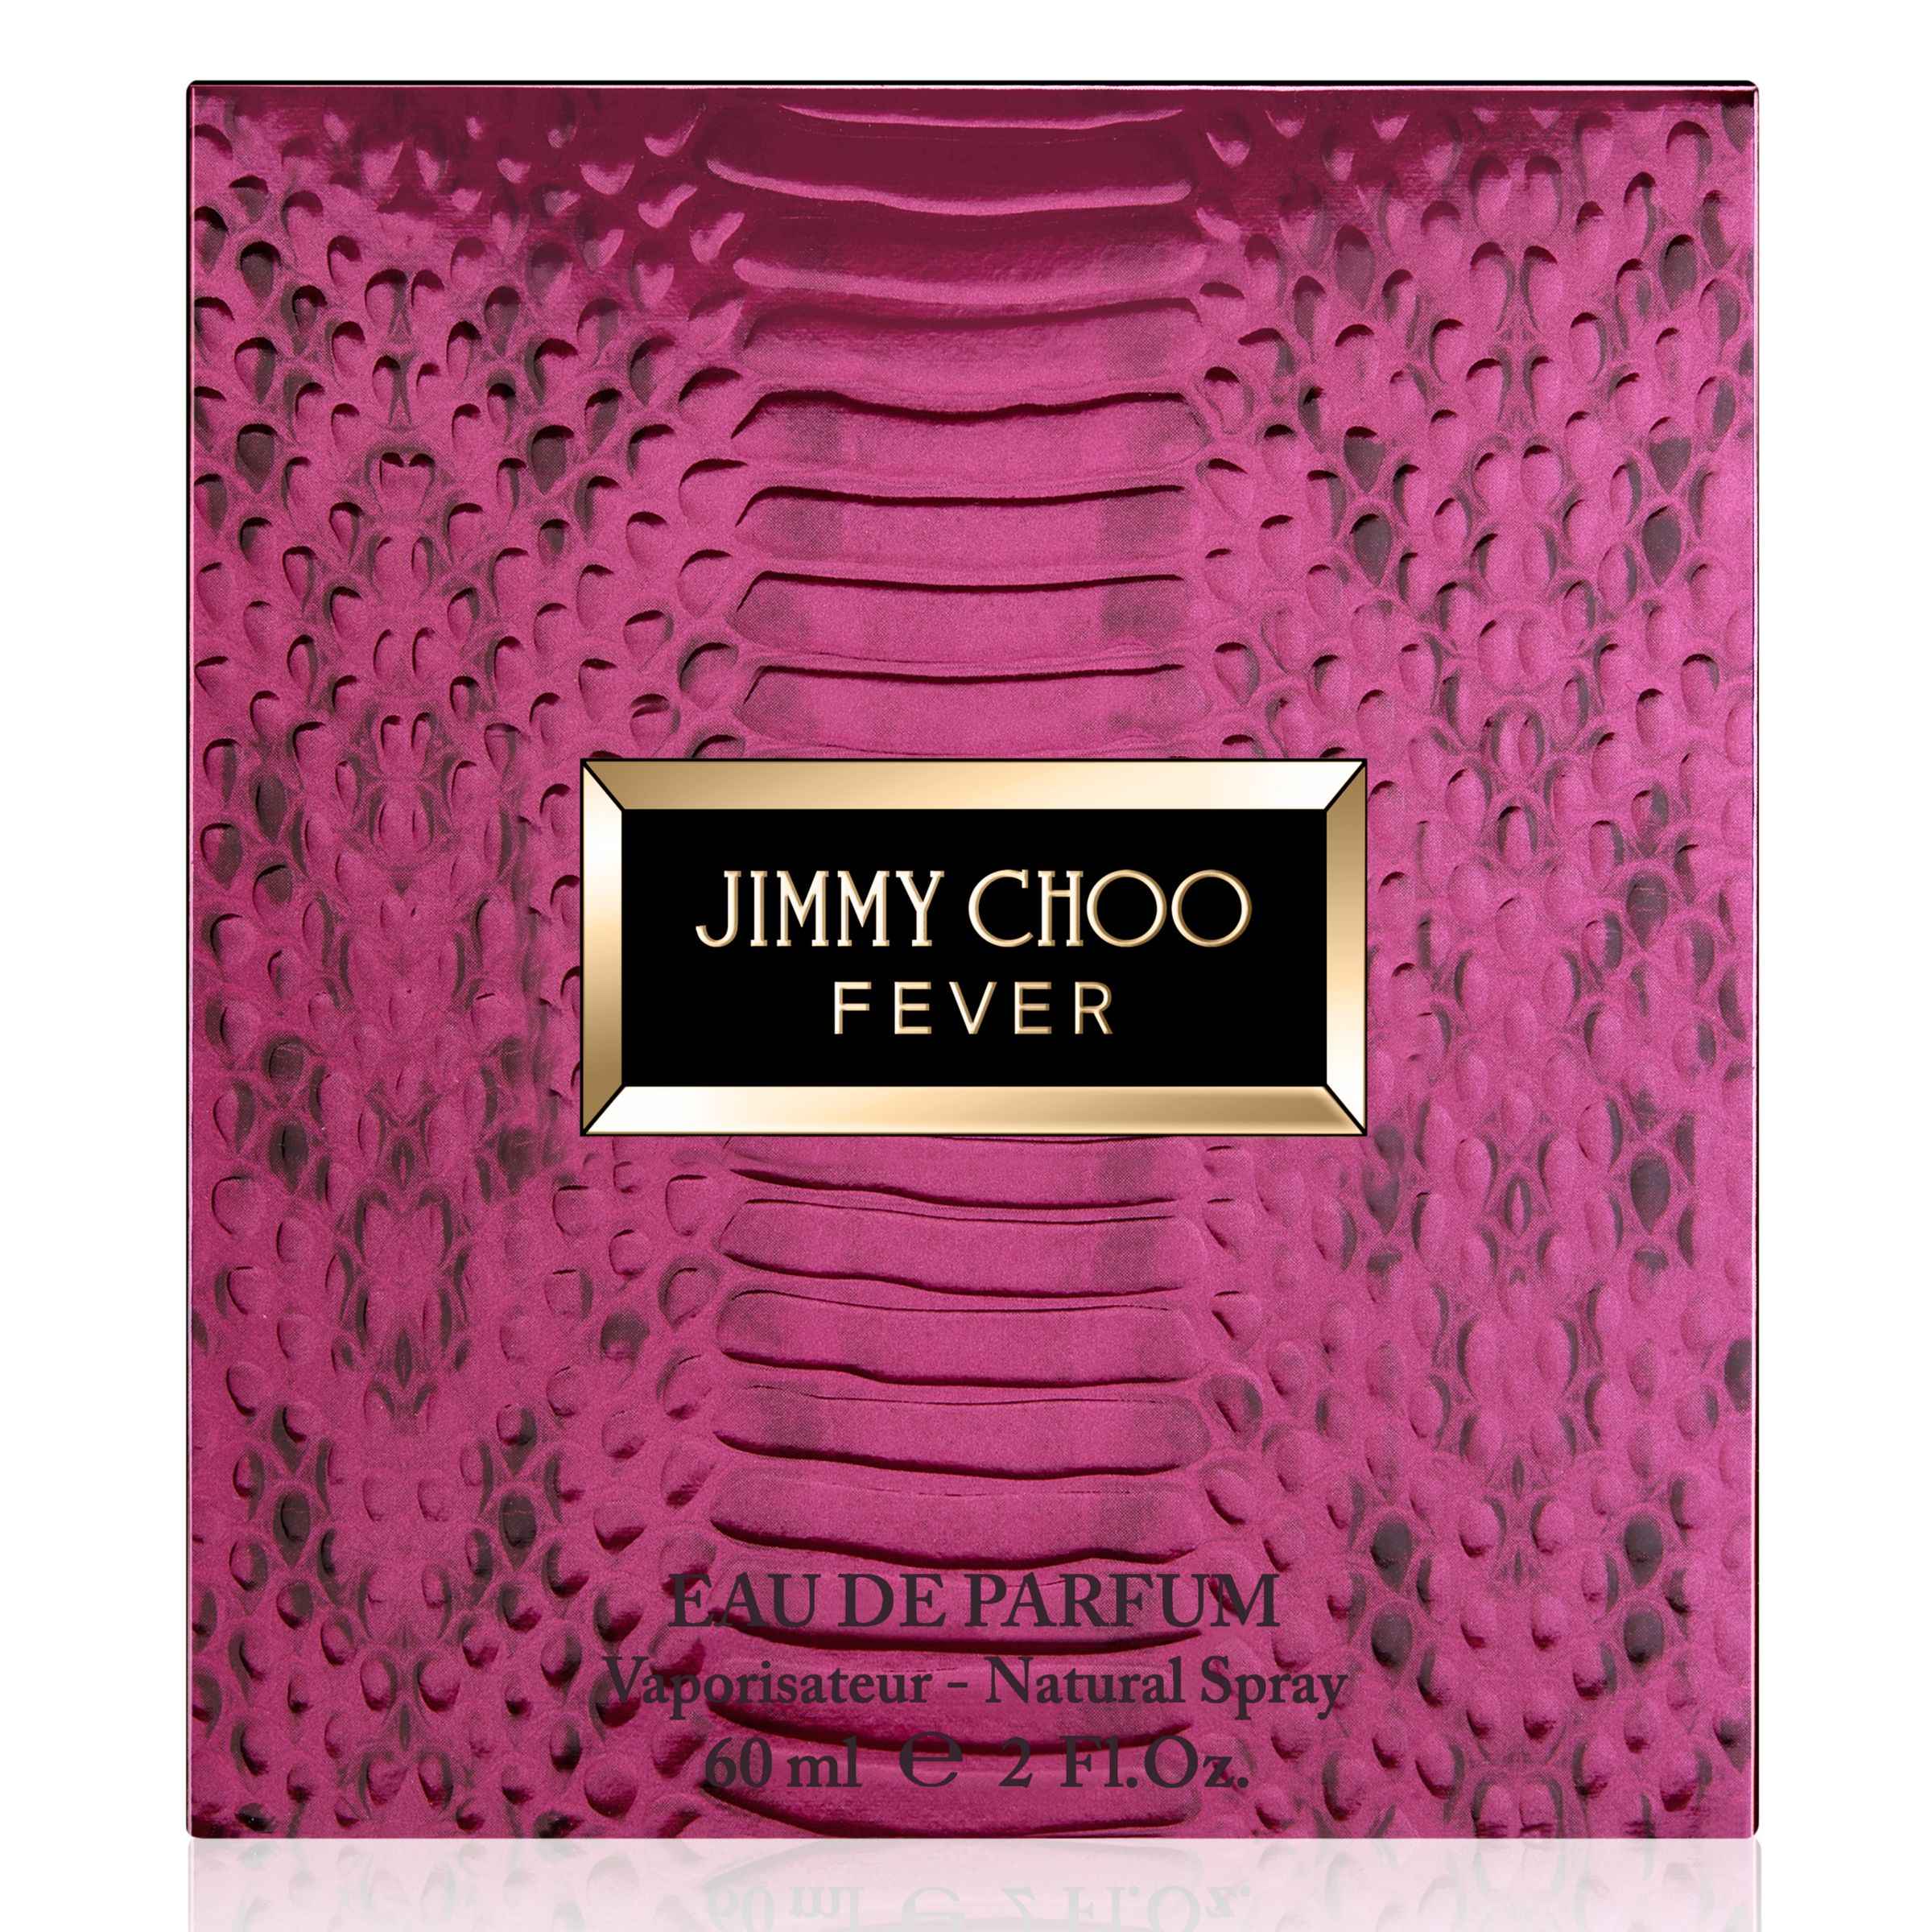 Jimmy Choo Fever Eau de Parfum, 60ml 6